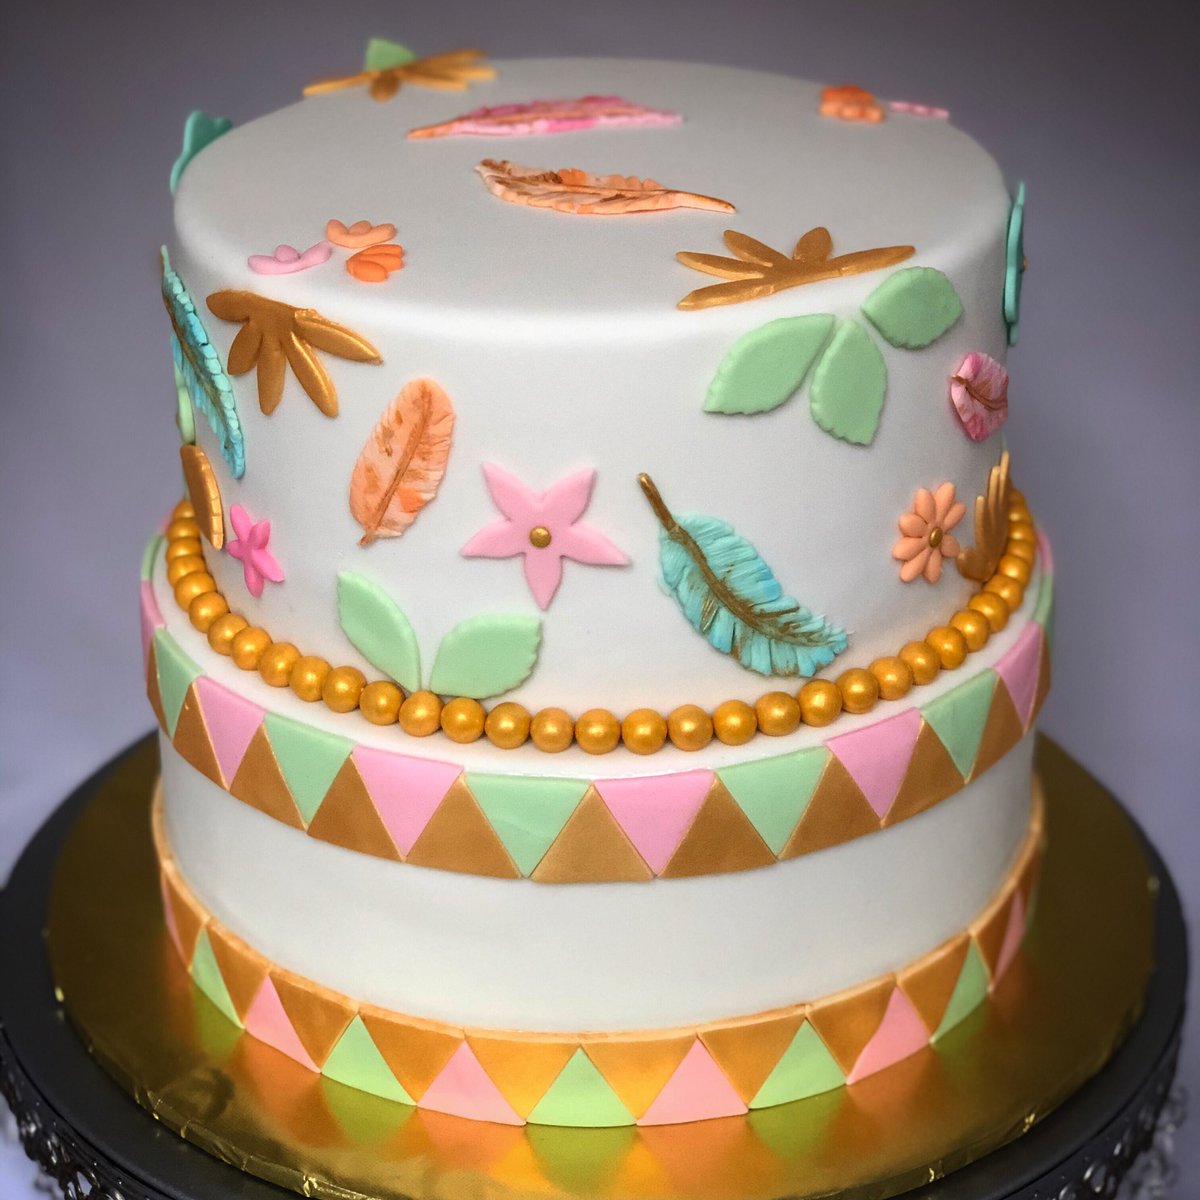 #cake #birthdaycake #cakedecorating #customcake #bellevue #hardwork #mydesign #redmondwa #bohostyle #bohodecor #bohocake #hardwork #details #seattle #vanillacake #chocolatecake #birthday #birthdaygirl Let’s continue sharing... Have a wonderful day!